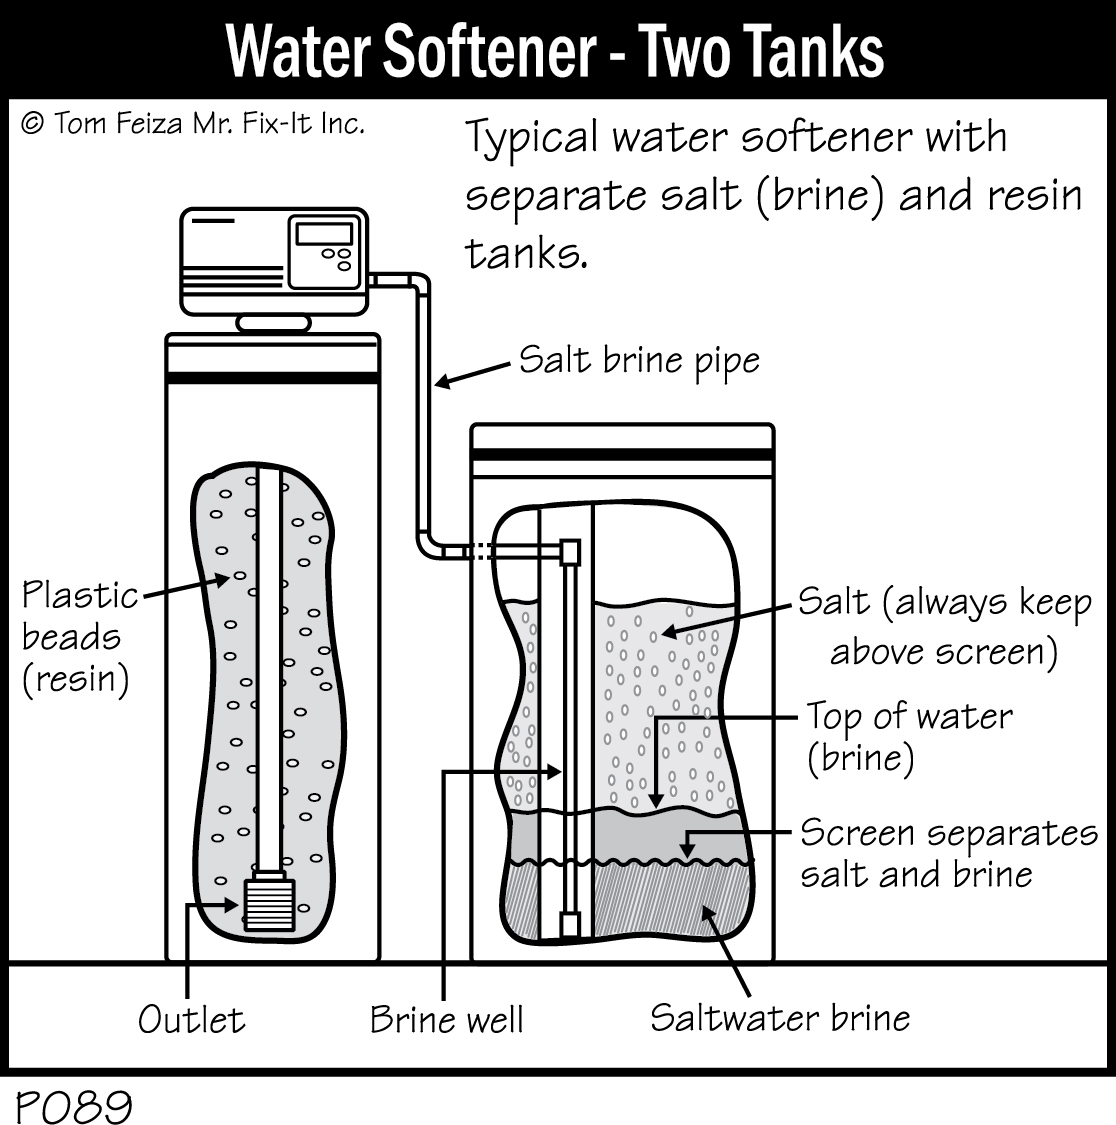 P089 - Water Softener - Two Tanks